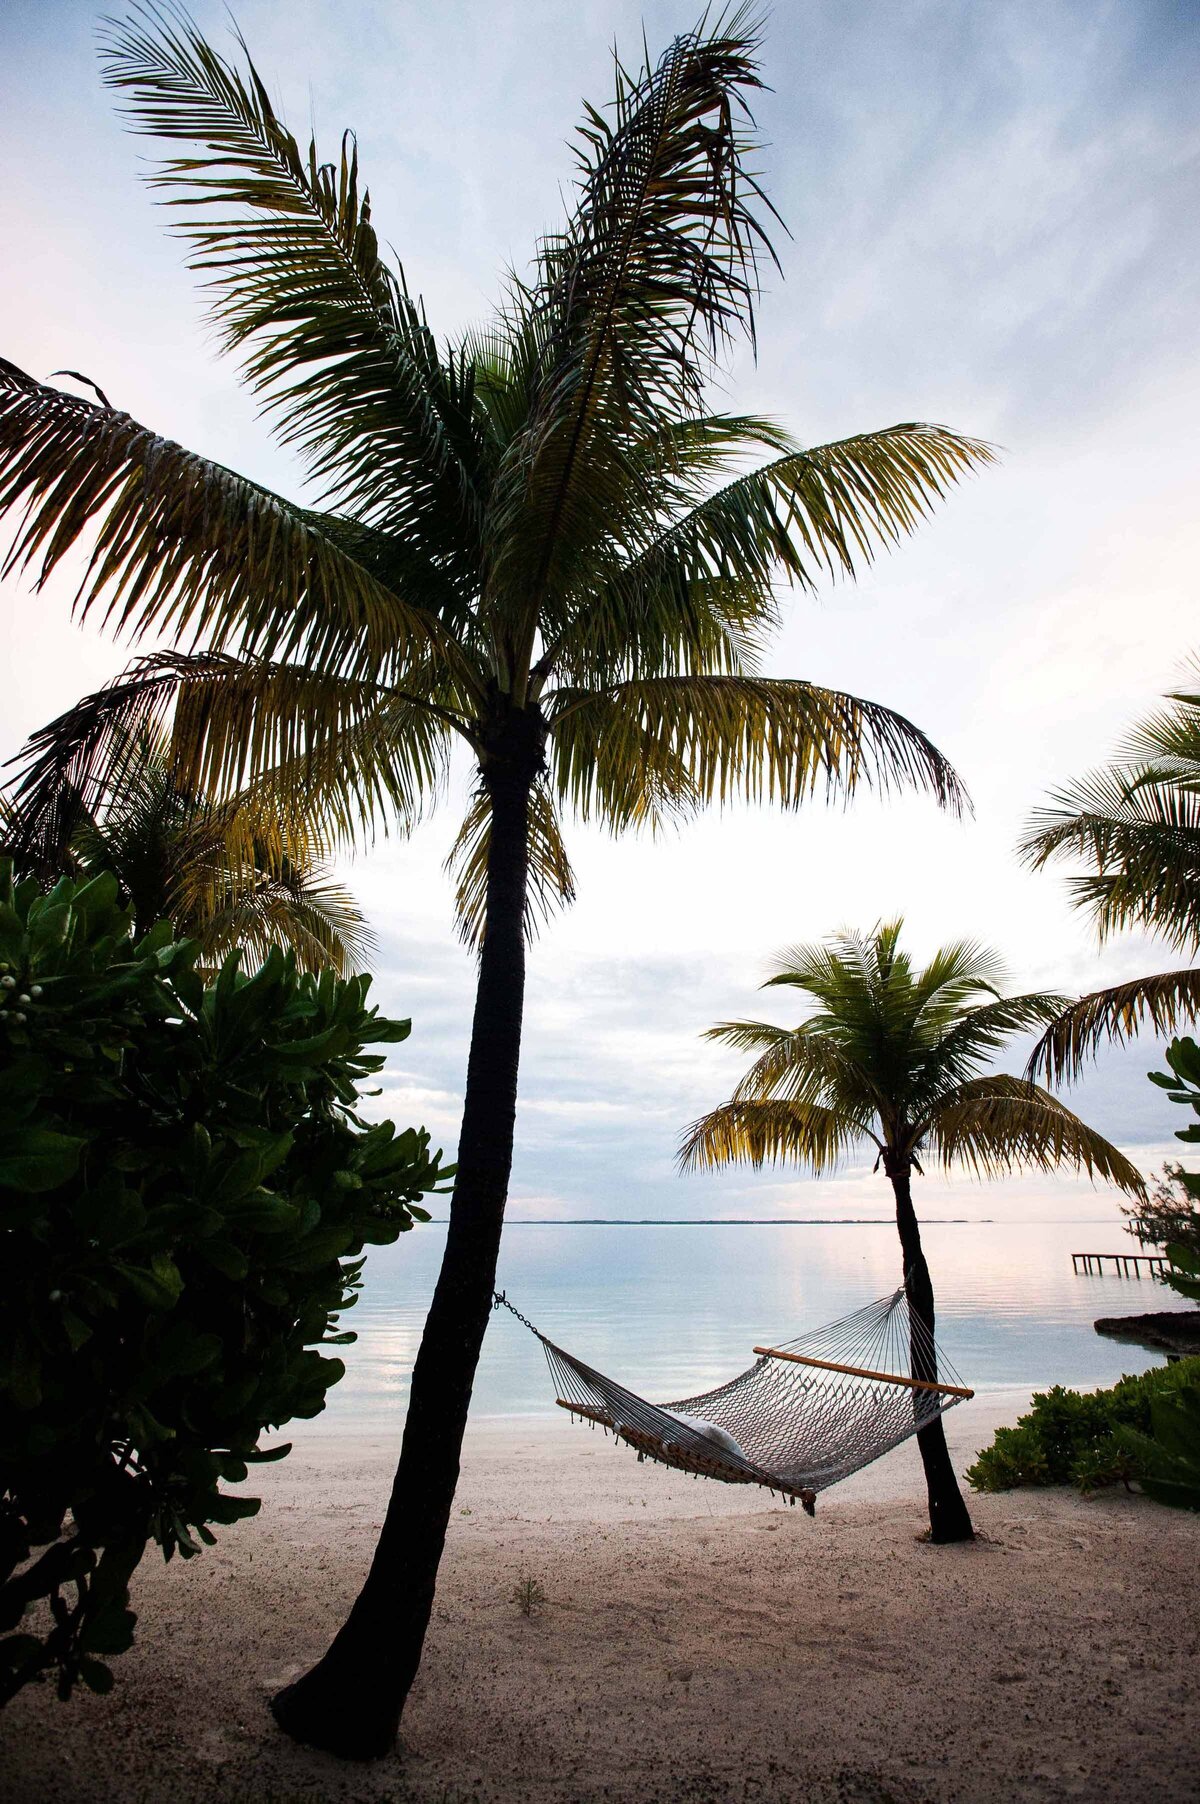 Harbour Island hammock scene on beach offers relaxation